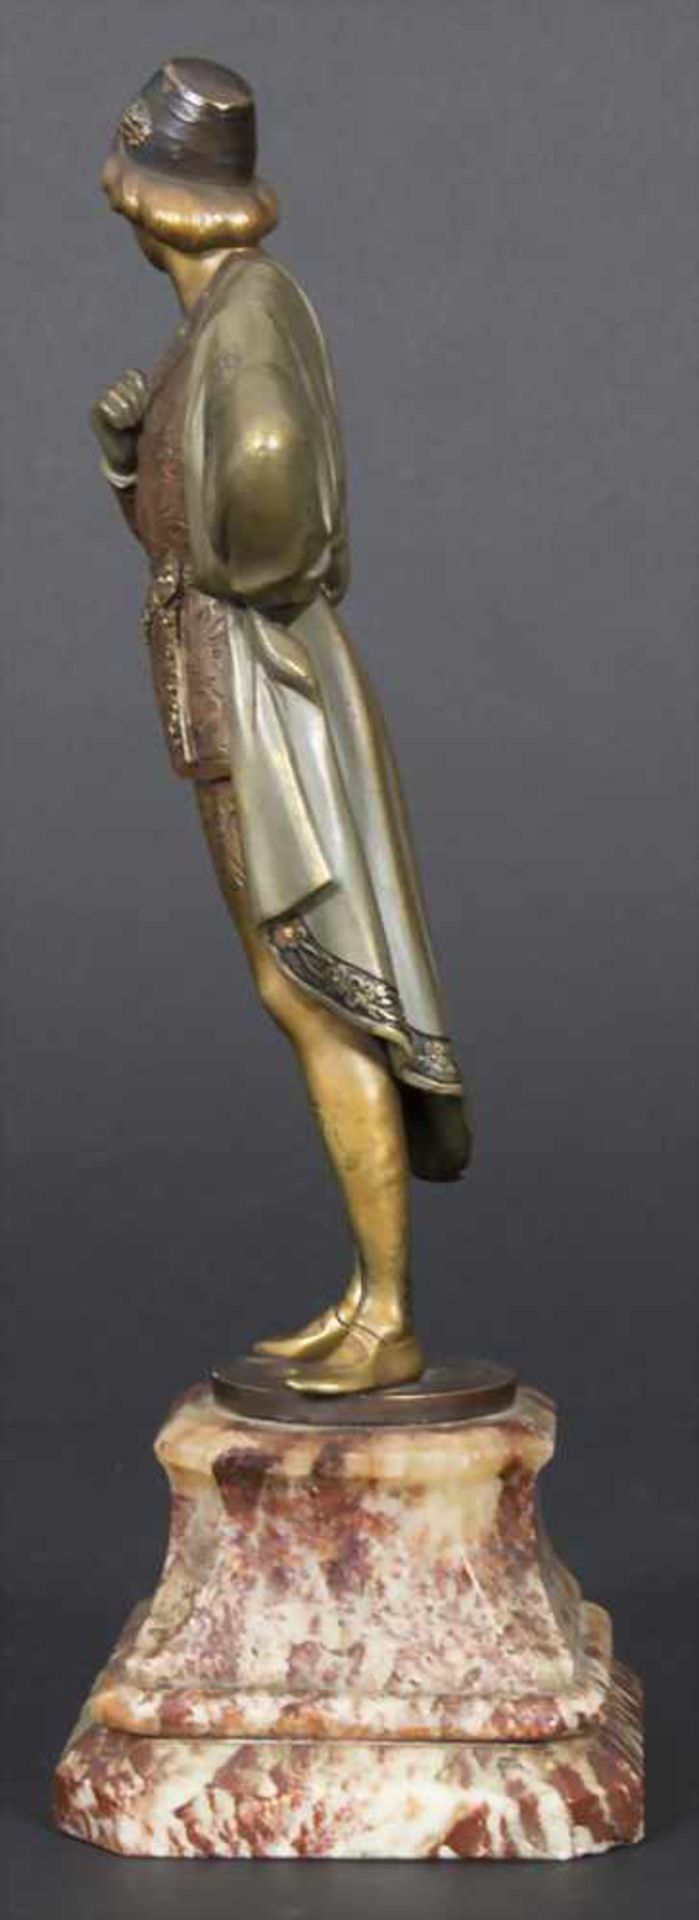 Jugendstil Skulptur, Adliger-Jüngling, Keck Hans (1875-1941)Material: Bronze, polychrom patiniert, - Image 2 of 6